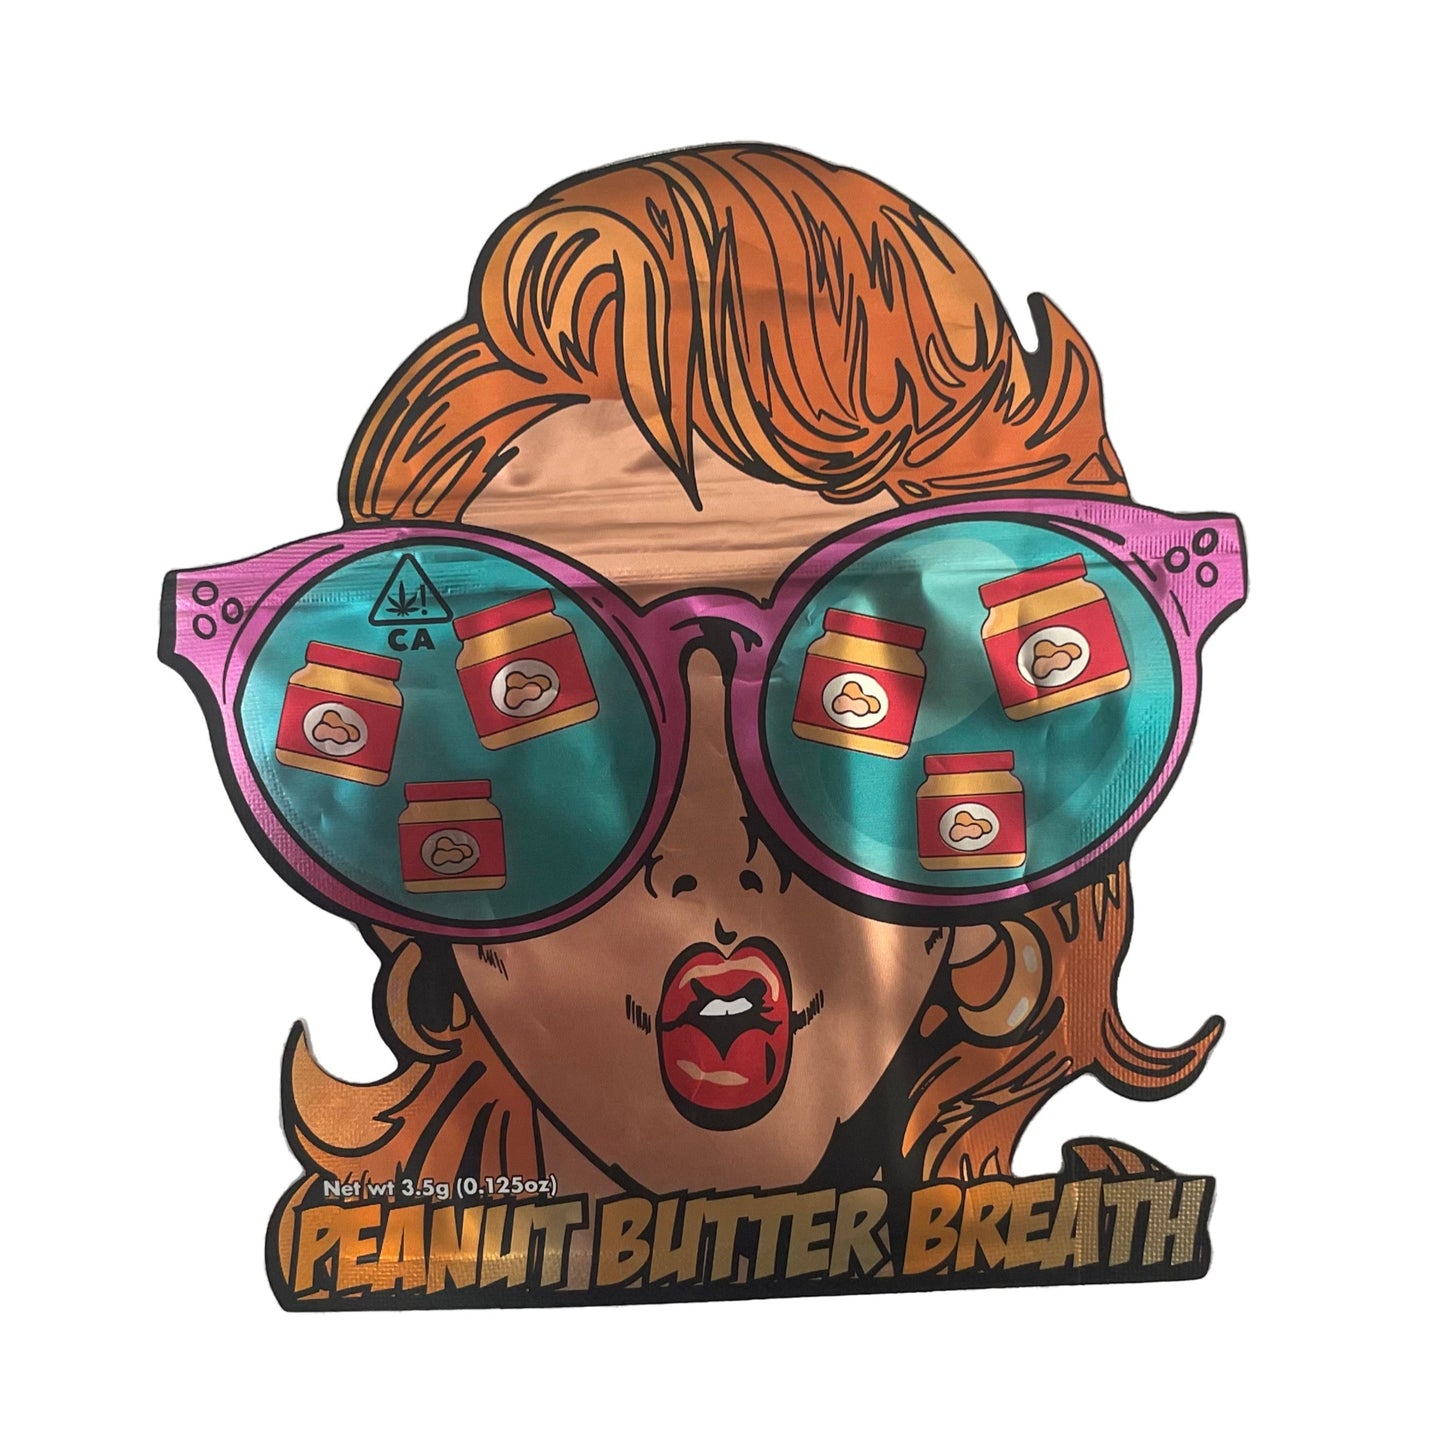 Peanut Butter Breath Cutout 3.5G Mylar Bags